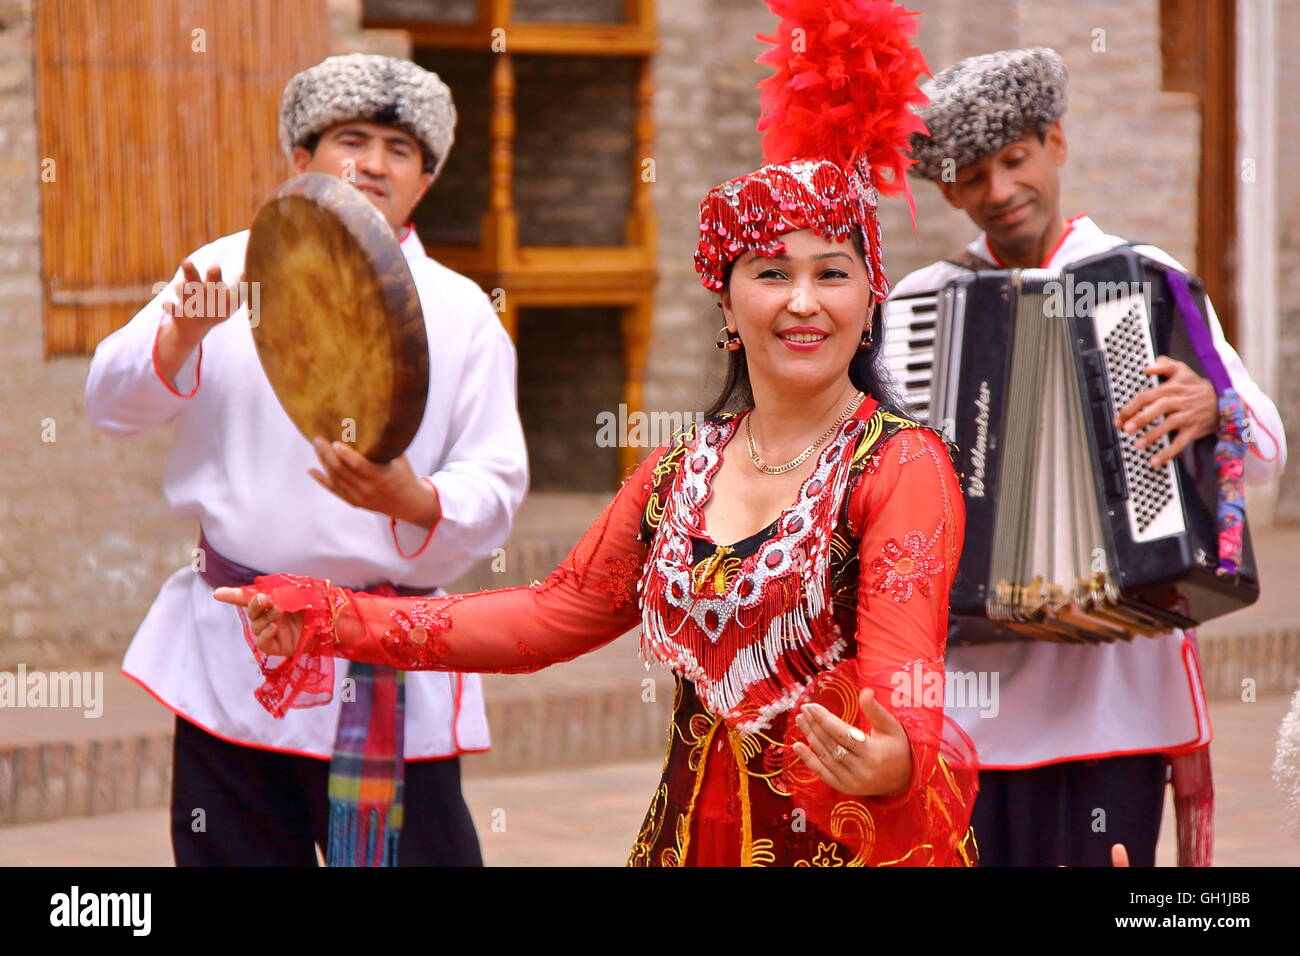 Traditionnal dance and music performed in Khiva, Uzbekistan Stock Photo